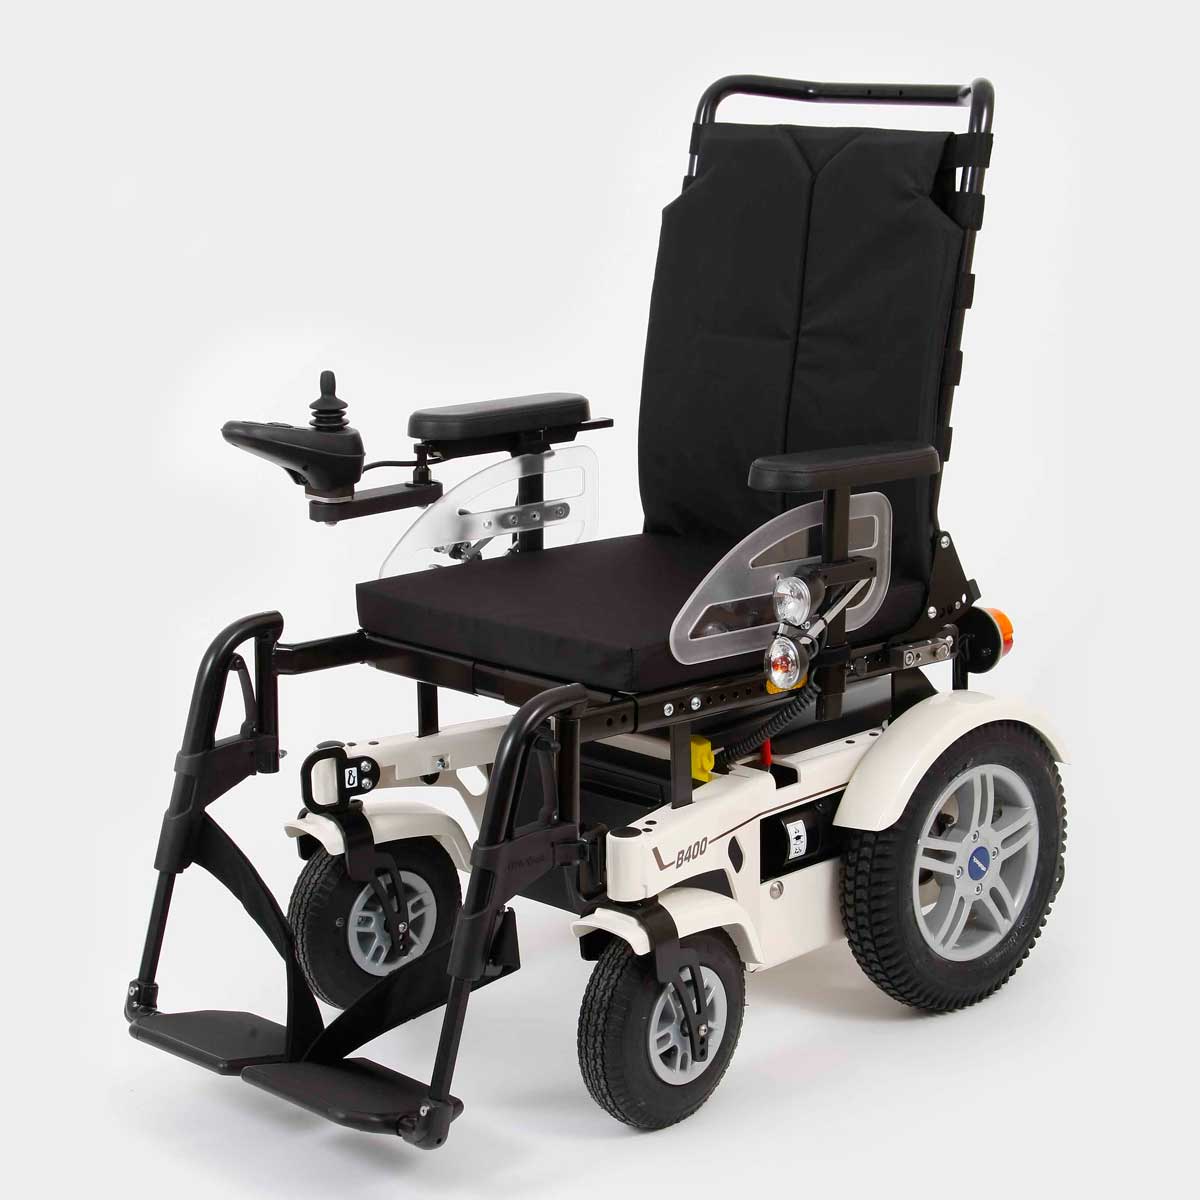 Коляска ottobock цена. Otto Bock b400. Оттобок b400 инвалидная коляска. Инвалидная коляска электрическая b400. Отто БОКК Б-400.